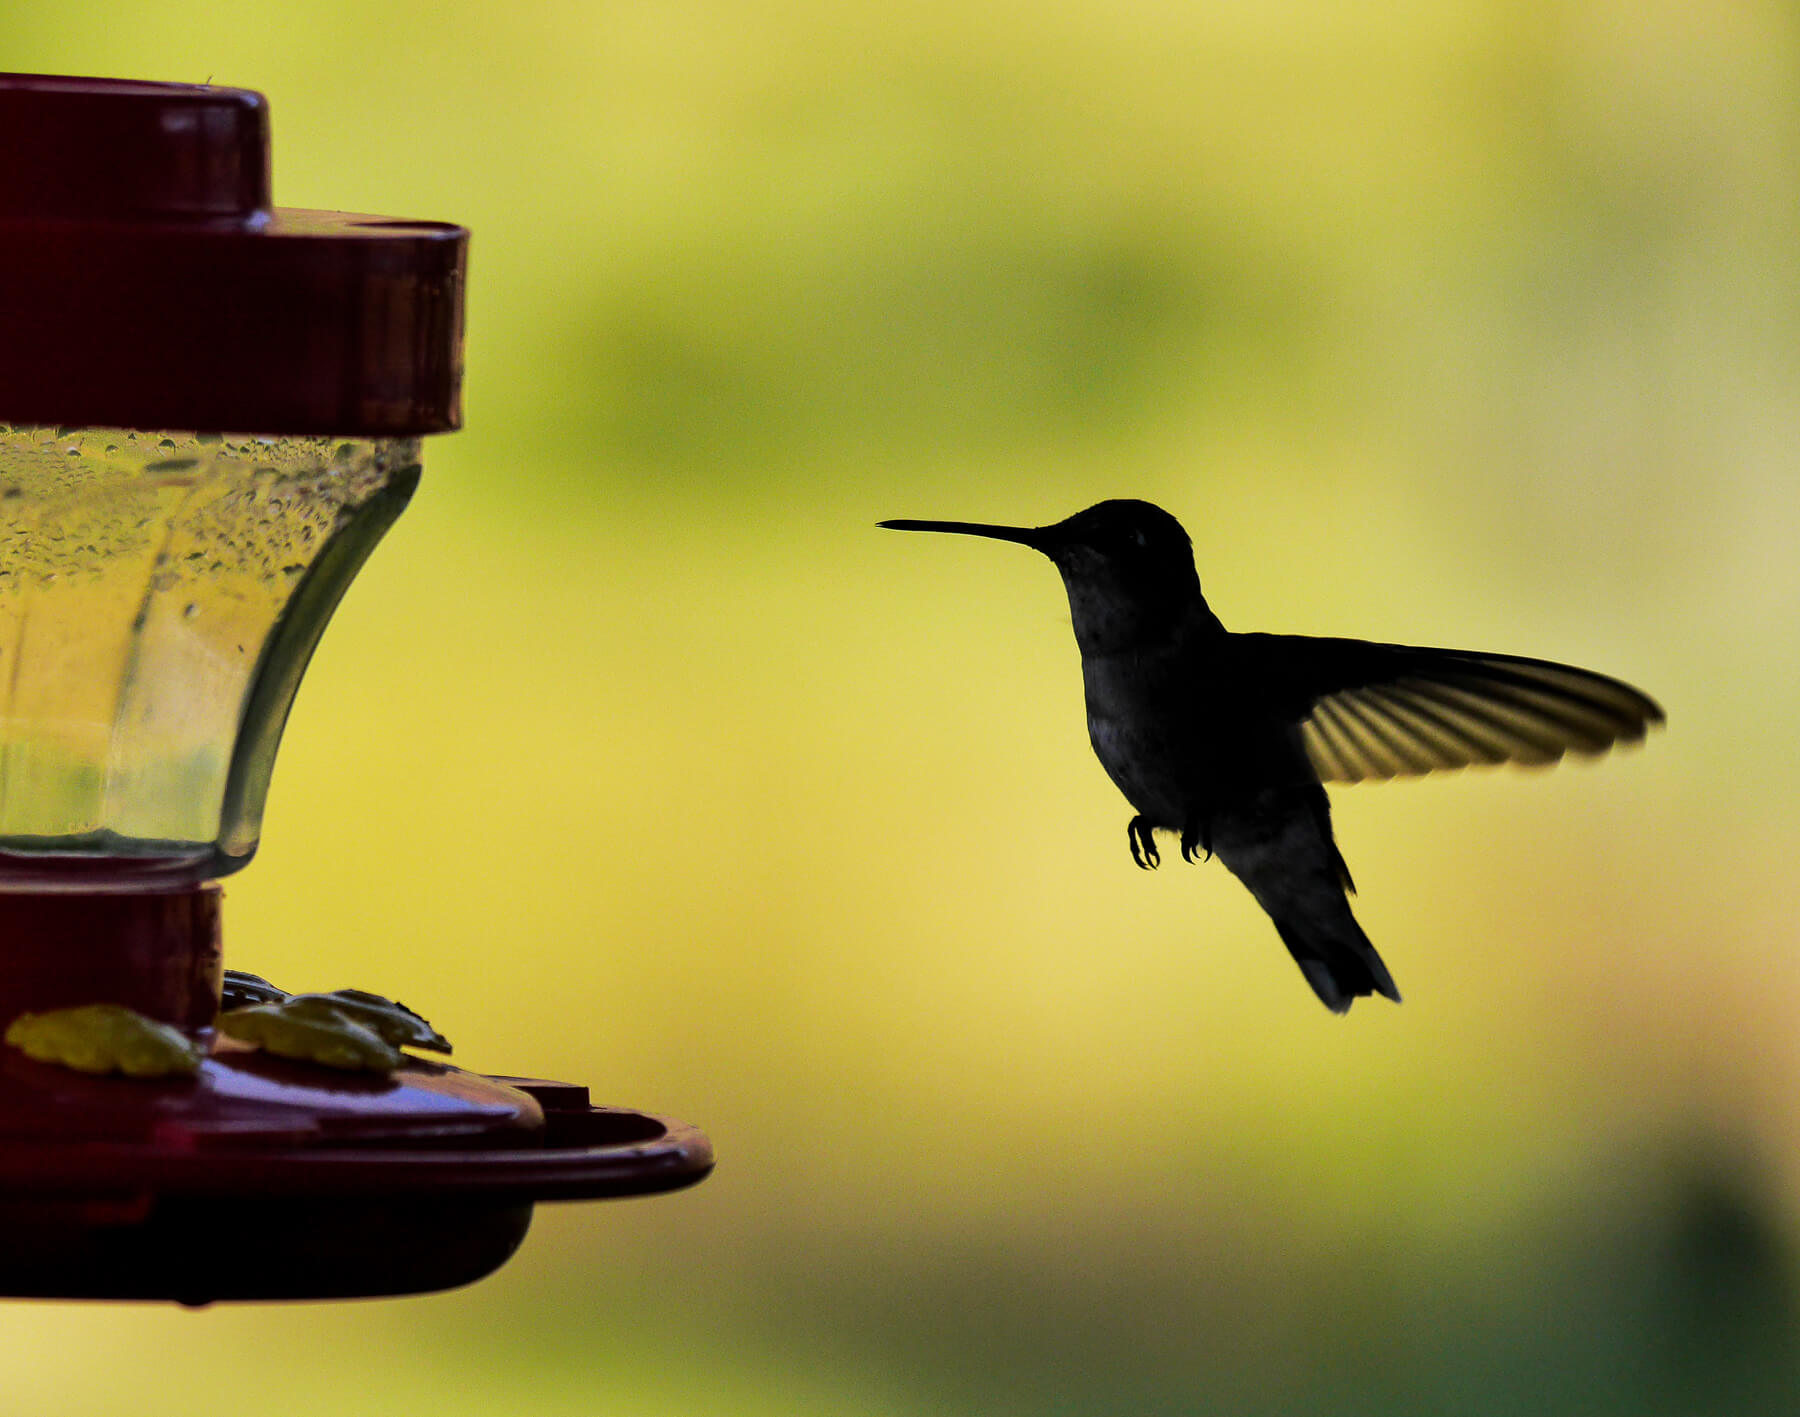 Shooting Hummingbirds with a Long Lens